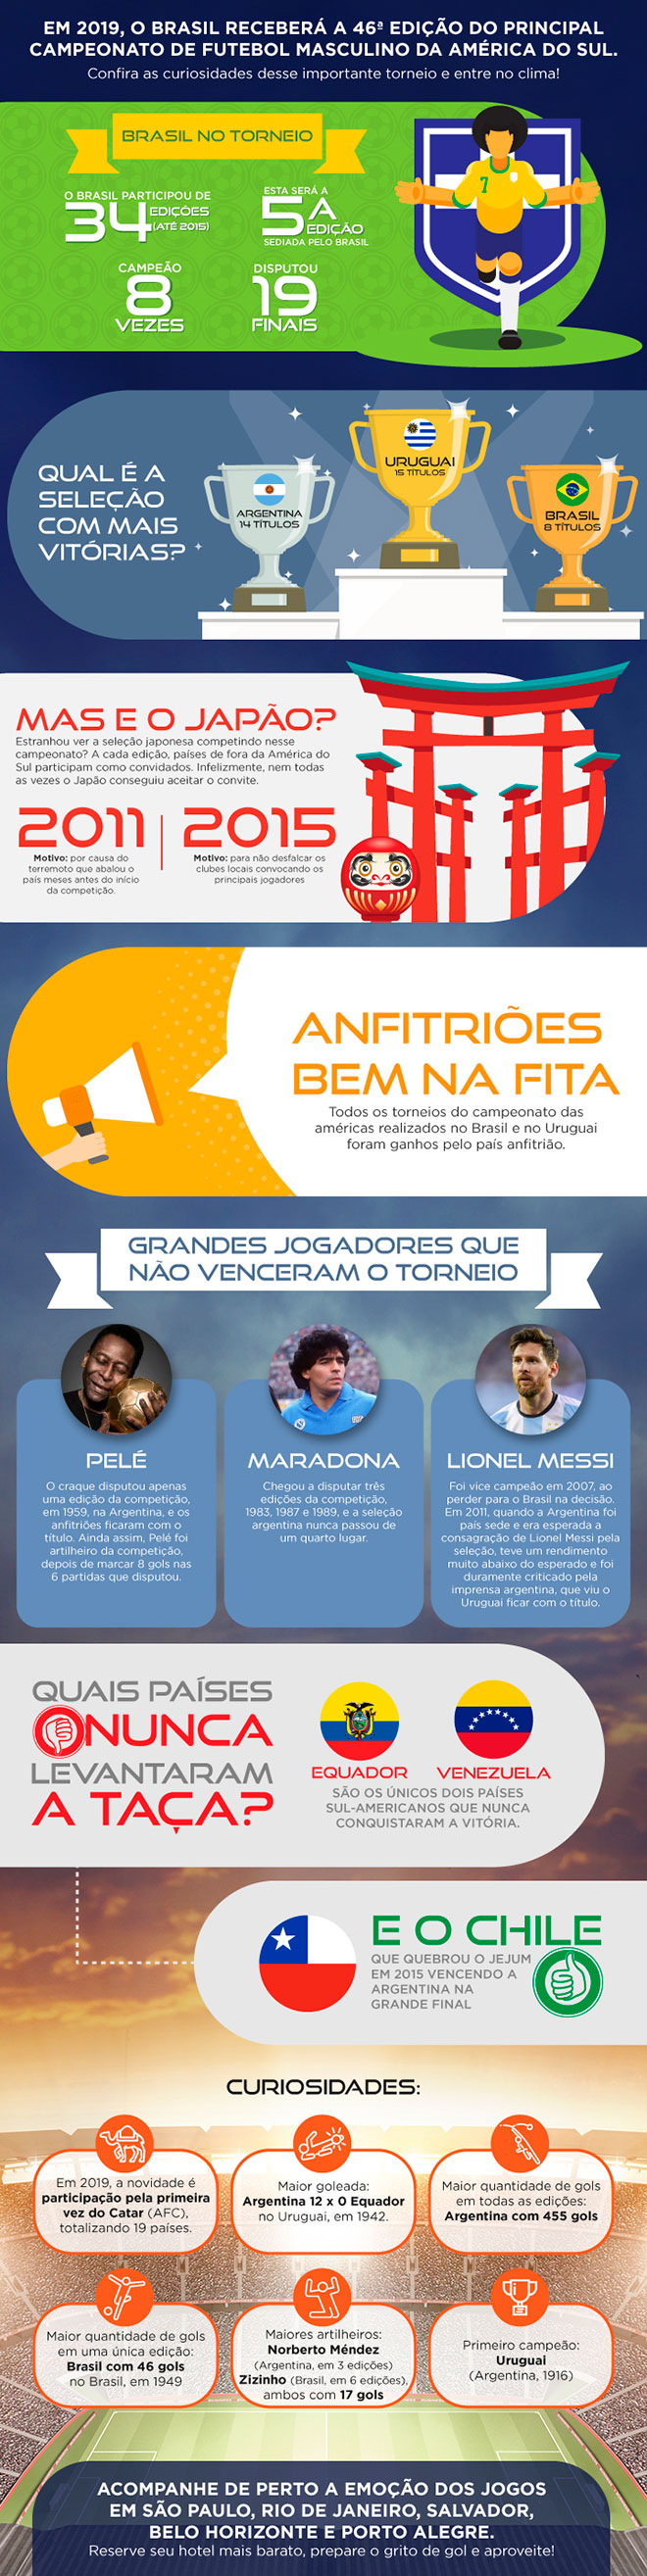 12 curiosidades sobre o Campeonato Brasileiro de Futebol - Portal